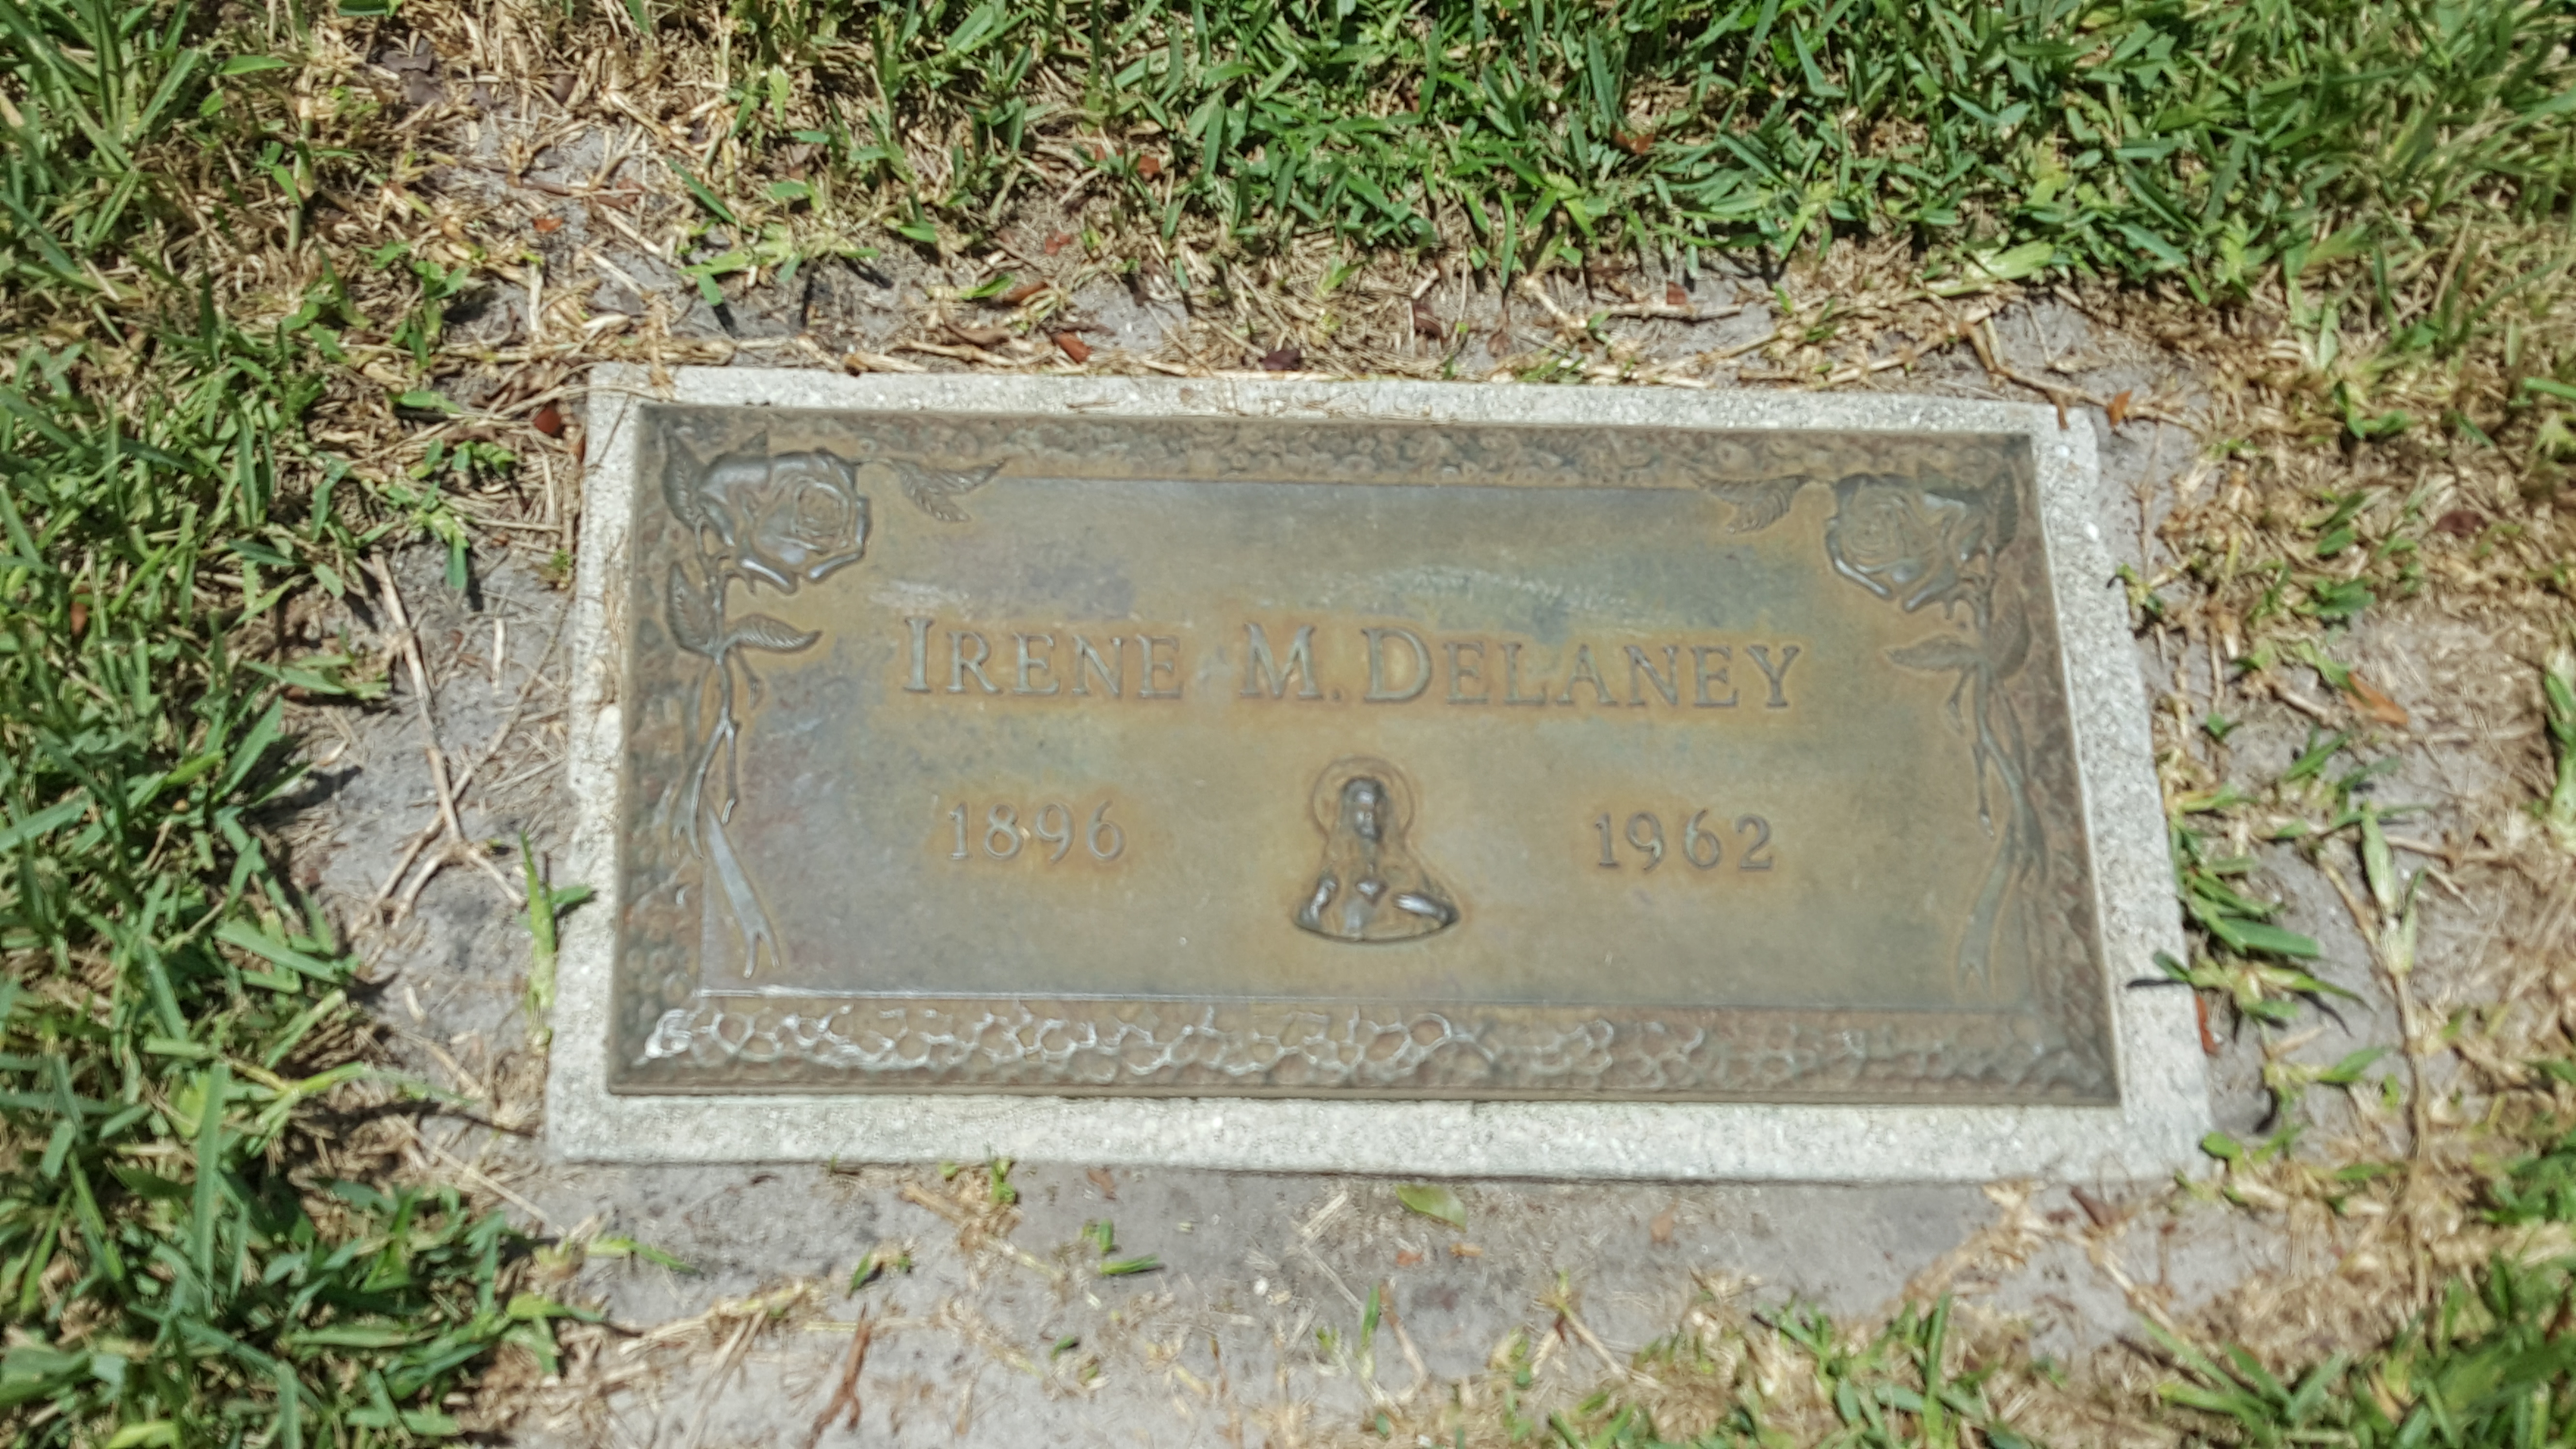 Irene M Delaney